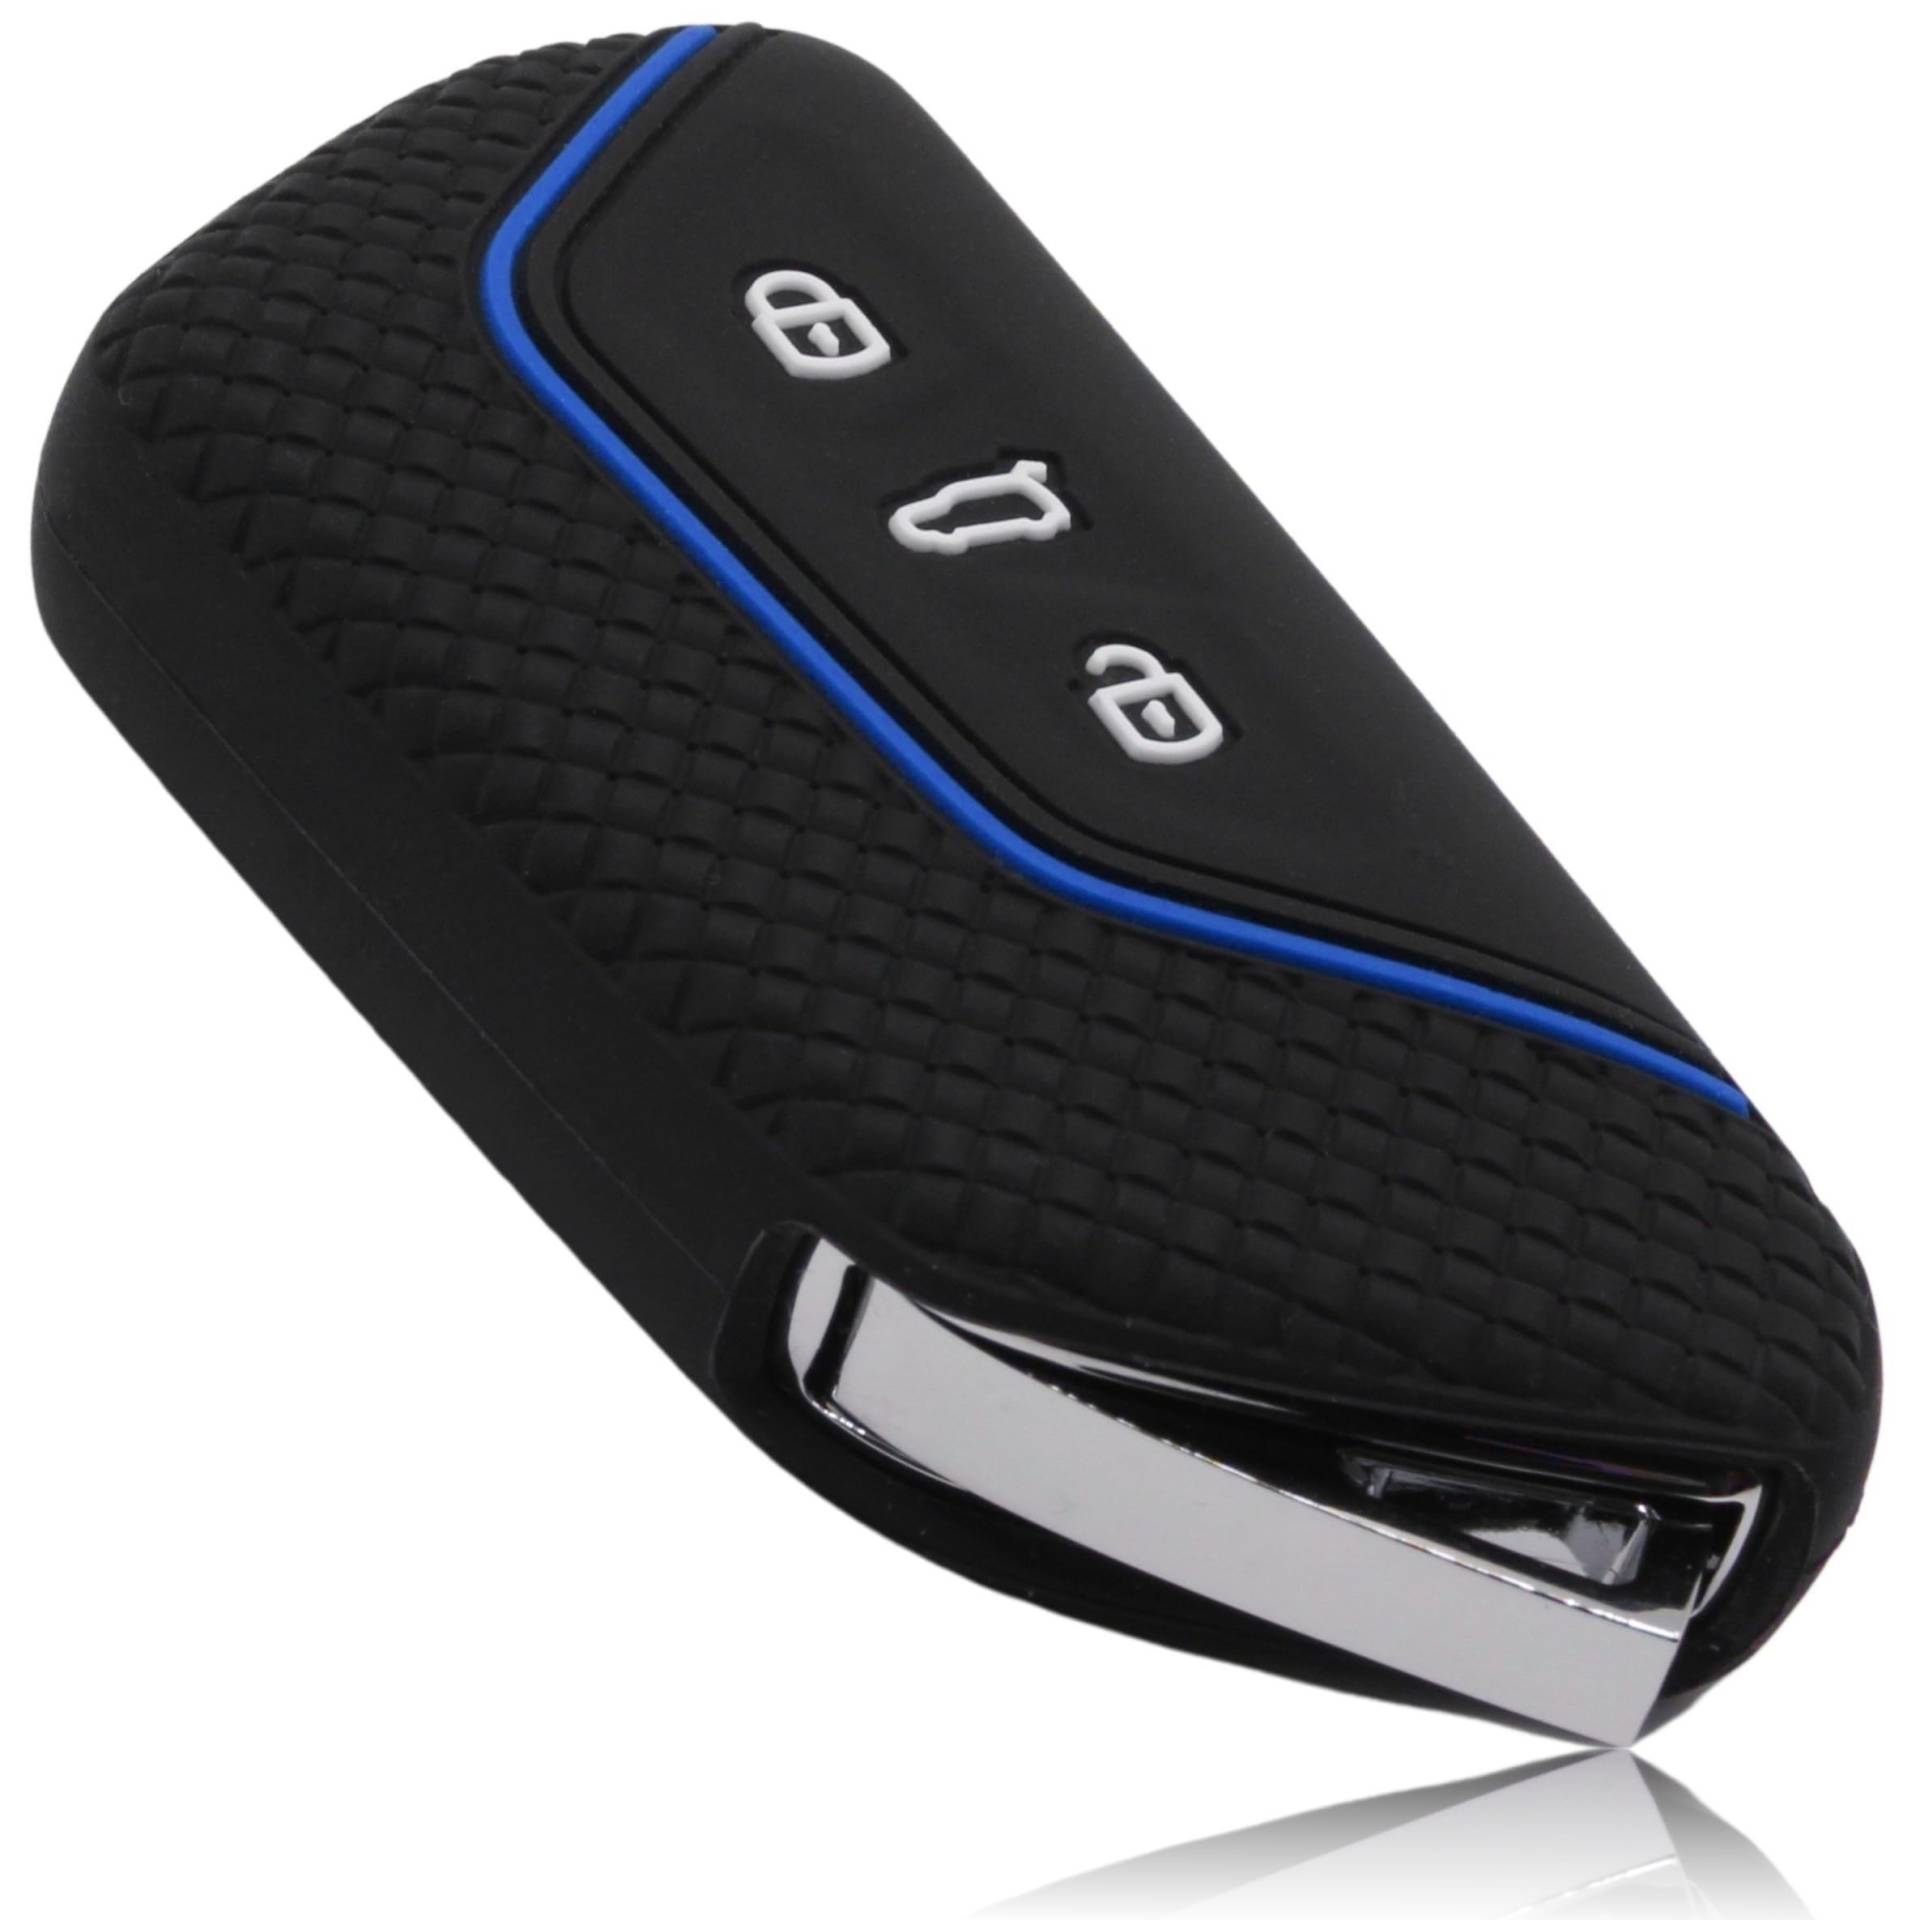 FOAMO Autoschlüssel Hülle Kompatibel mit VW, SEAT, SKODA, CUPRA Autoschlüssel - Silikon Schlüsselhülle - Schlüsselhülle - Schutz für Autoschlüssel in Schwarz Blau von FOAMO